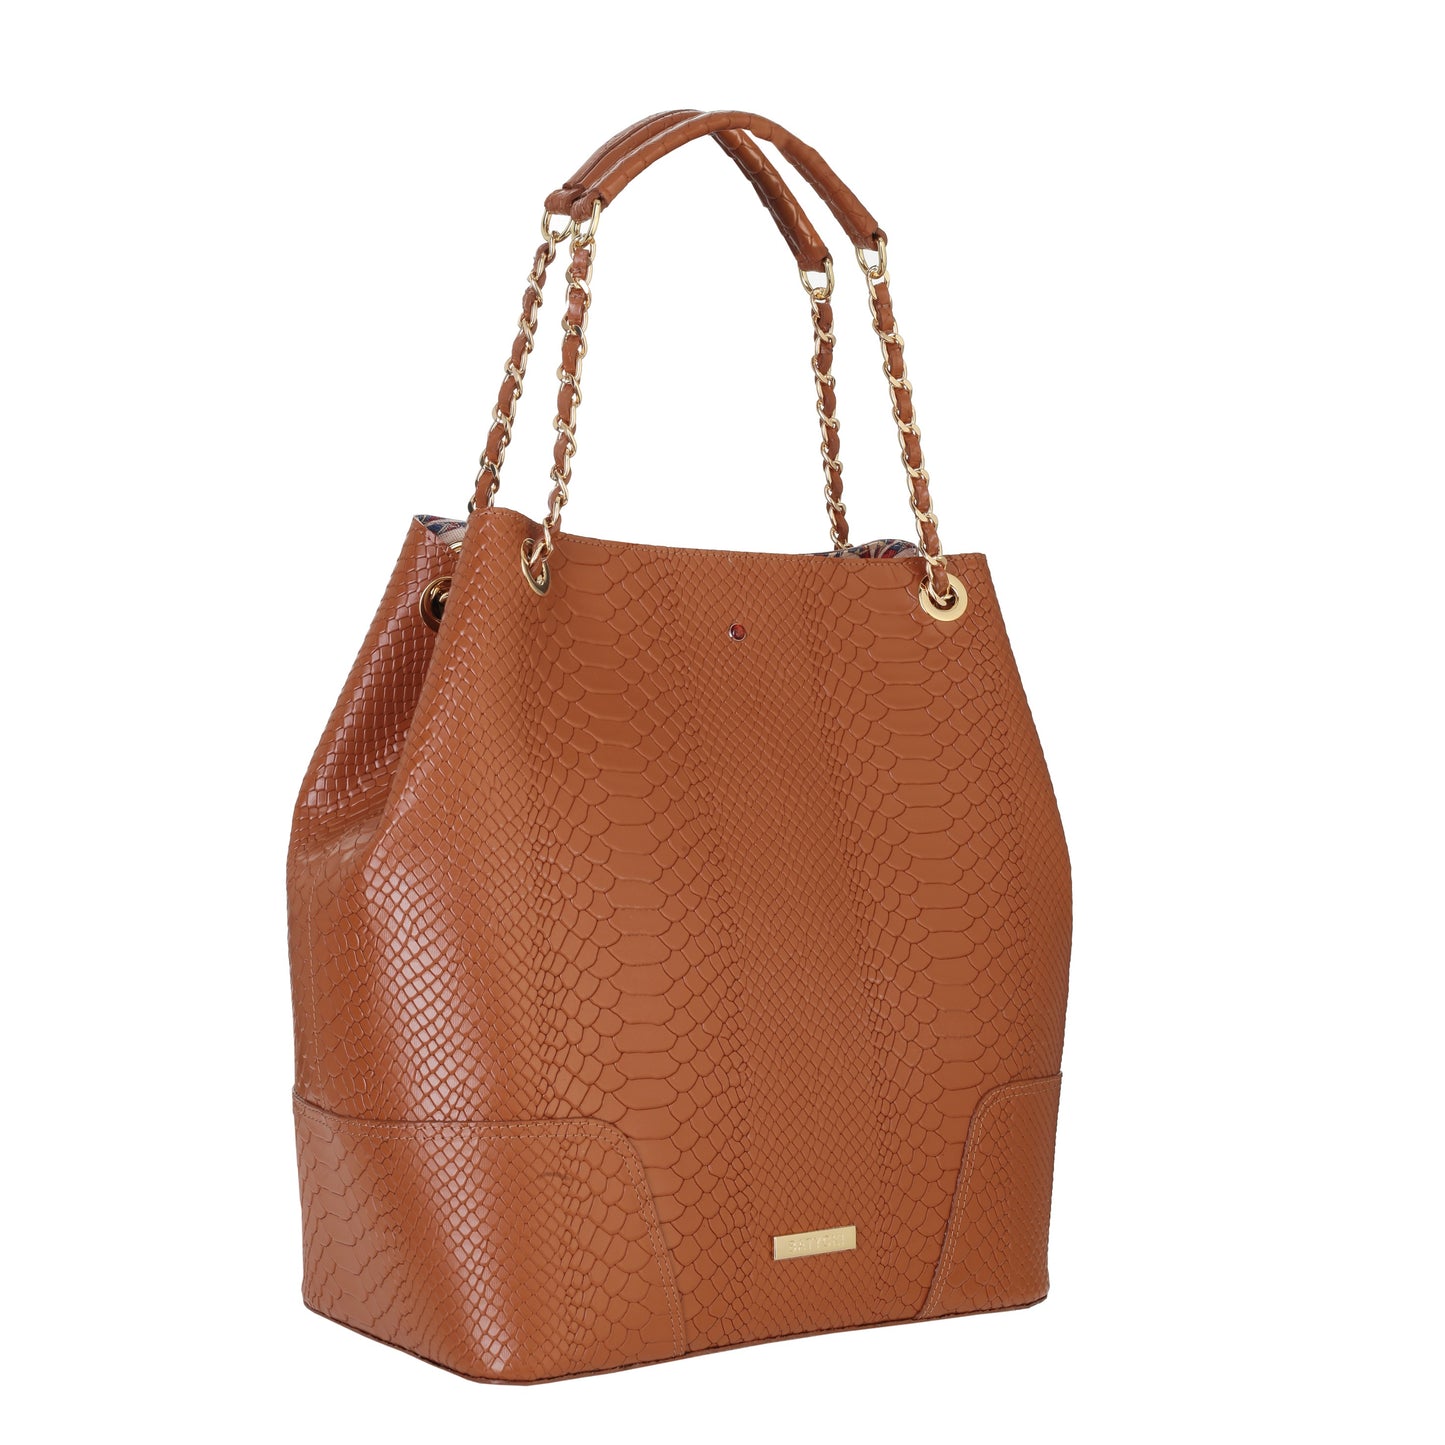 AMELIA COGNAC women's leather handbag